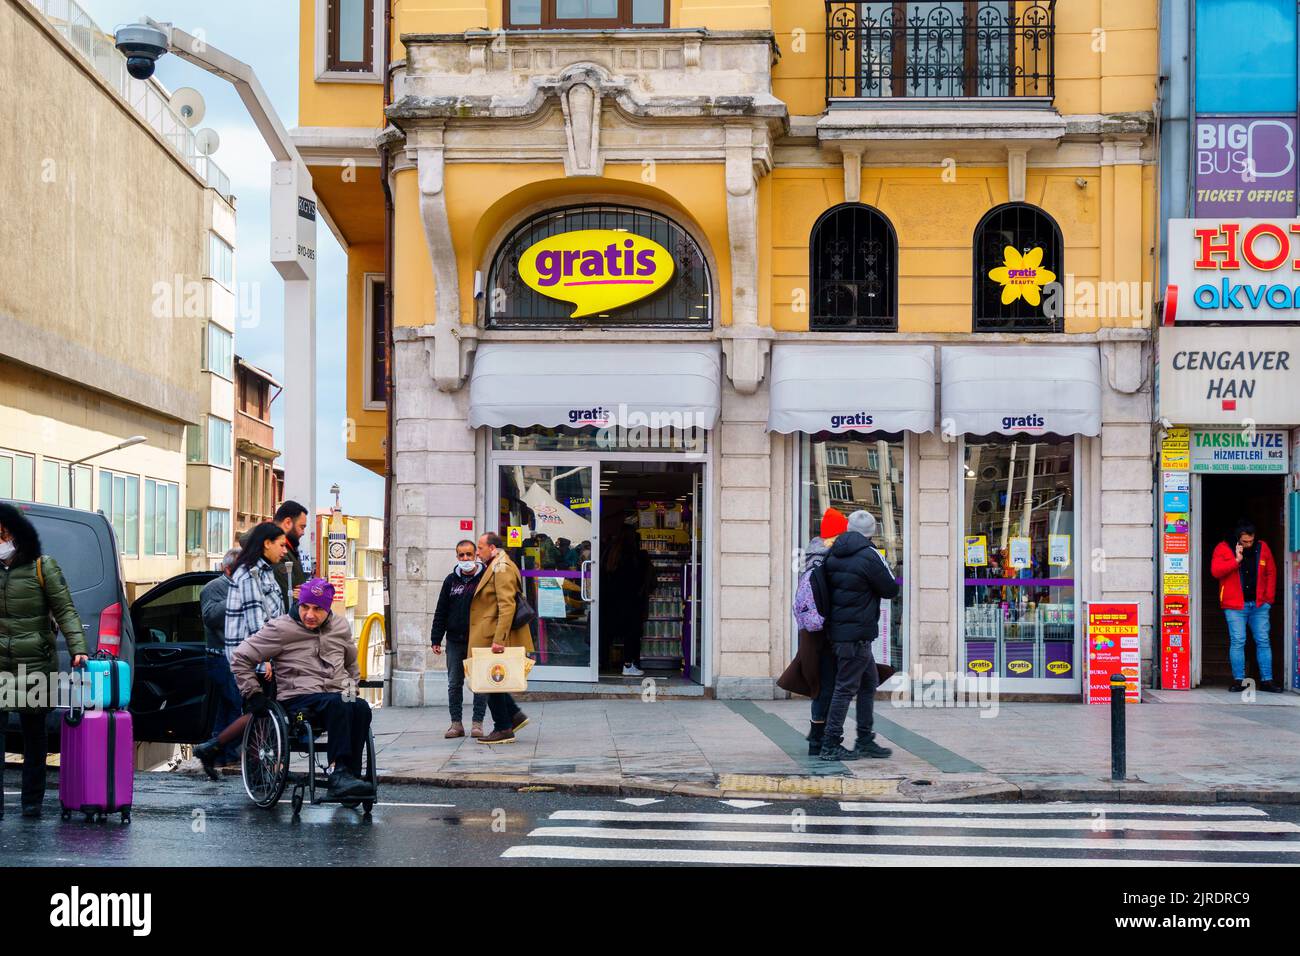 Istanbul, Turkey - Mar 20, 2022: Portrait Street View of Gratis Cosmteics Shop in Taksim Area. Stock Photo